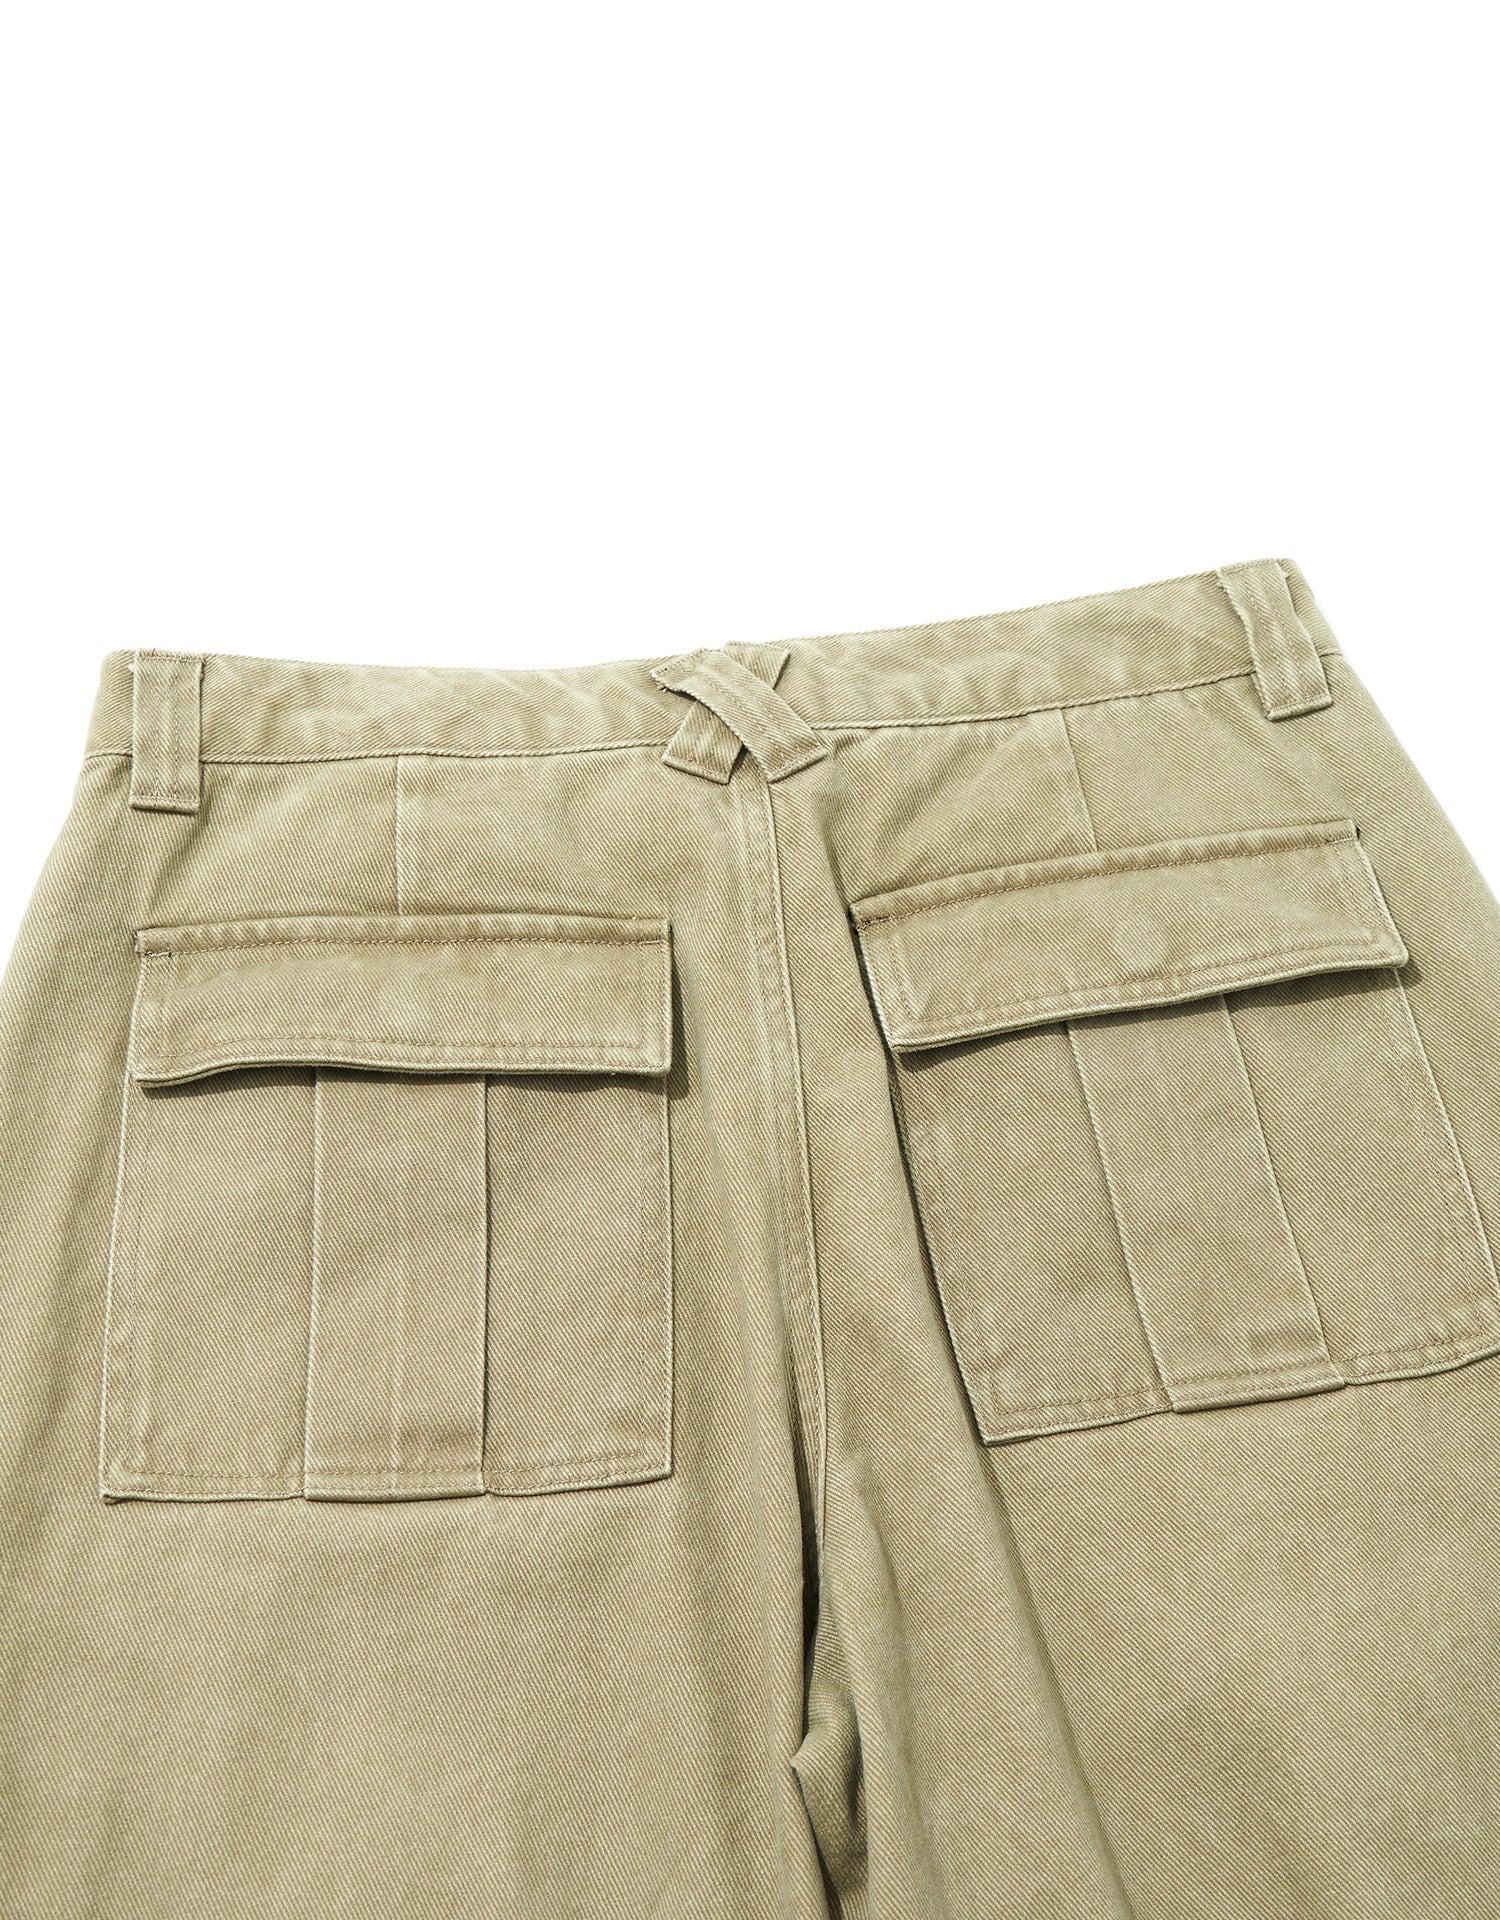 TopBasics Seven Pockets Vintage Cargo Pants